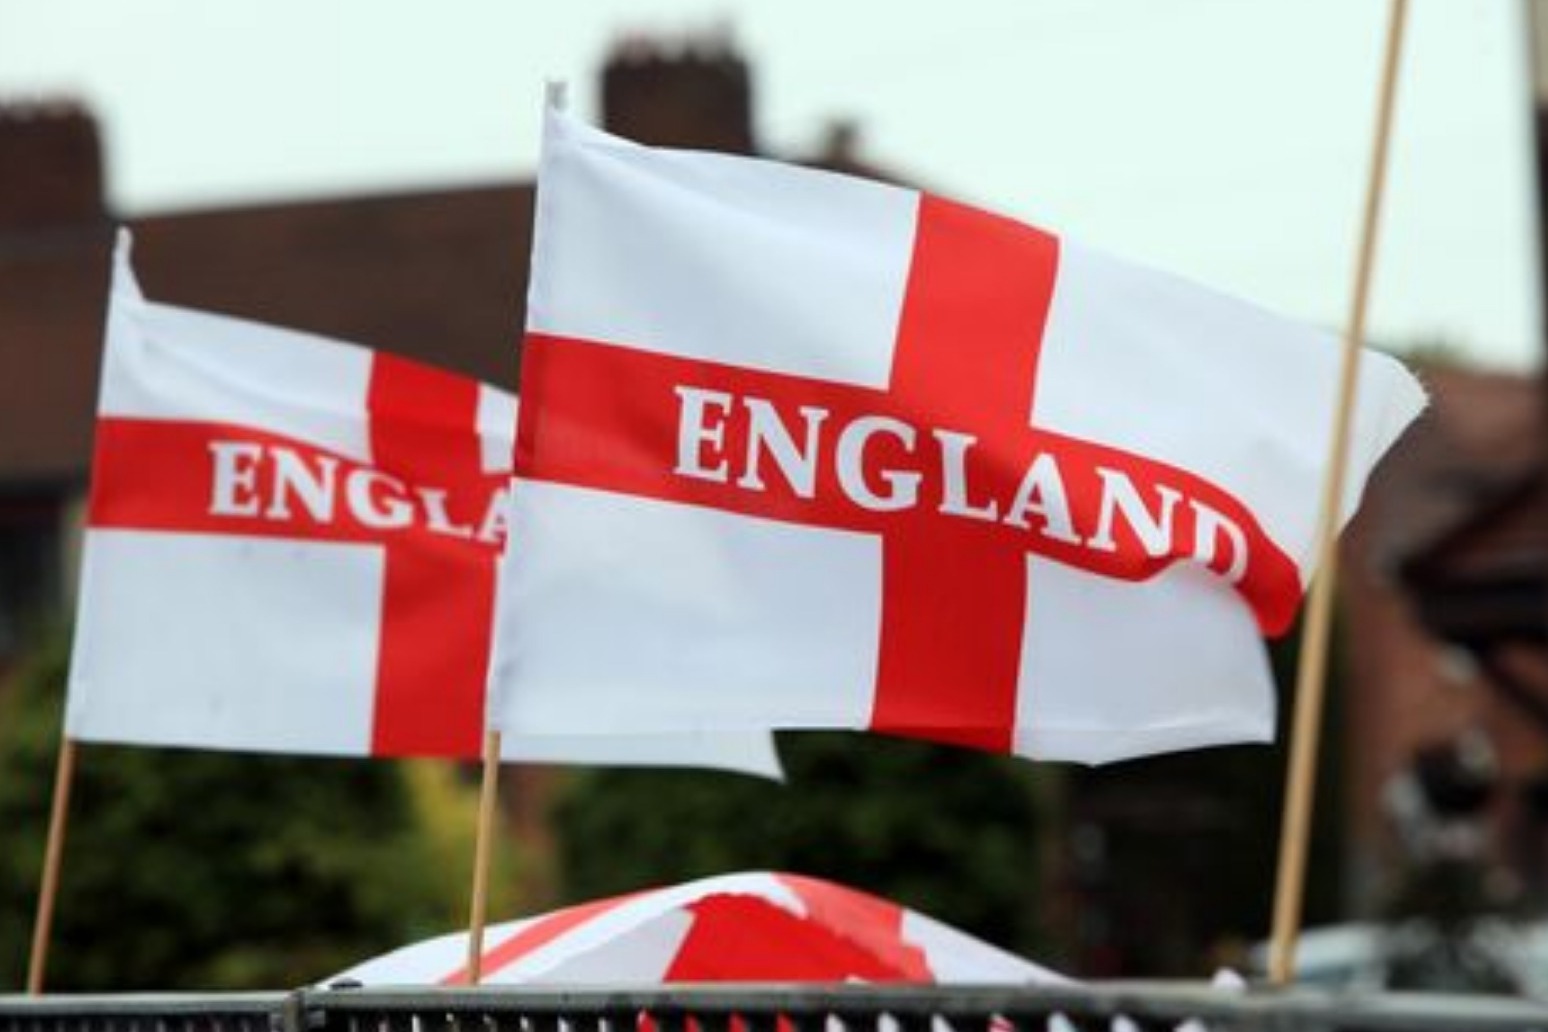 Hopes dashed, England fans taste bitter defeat once again 